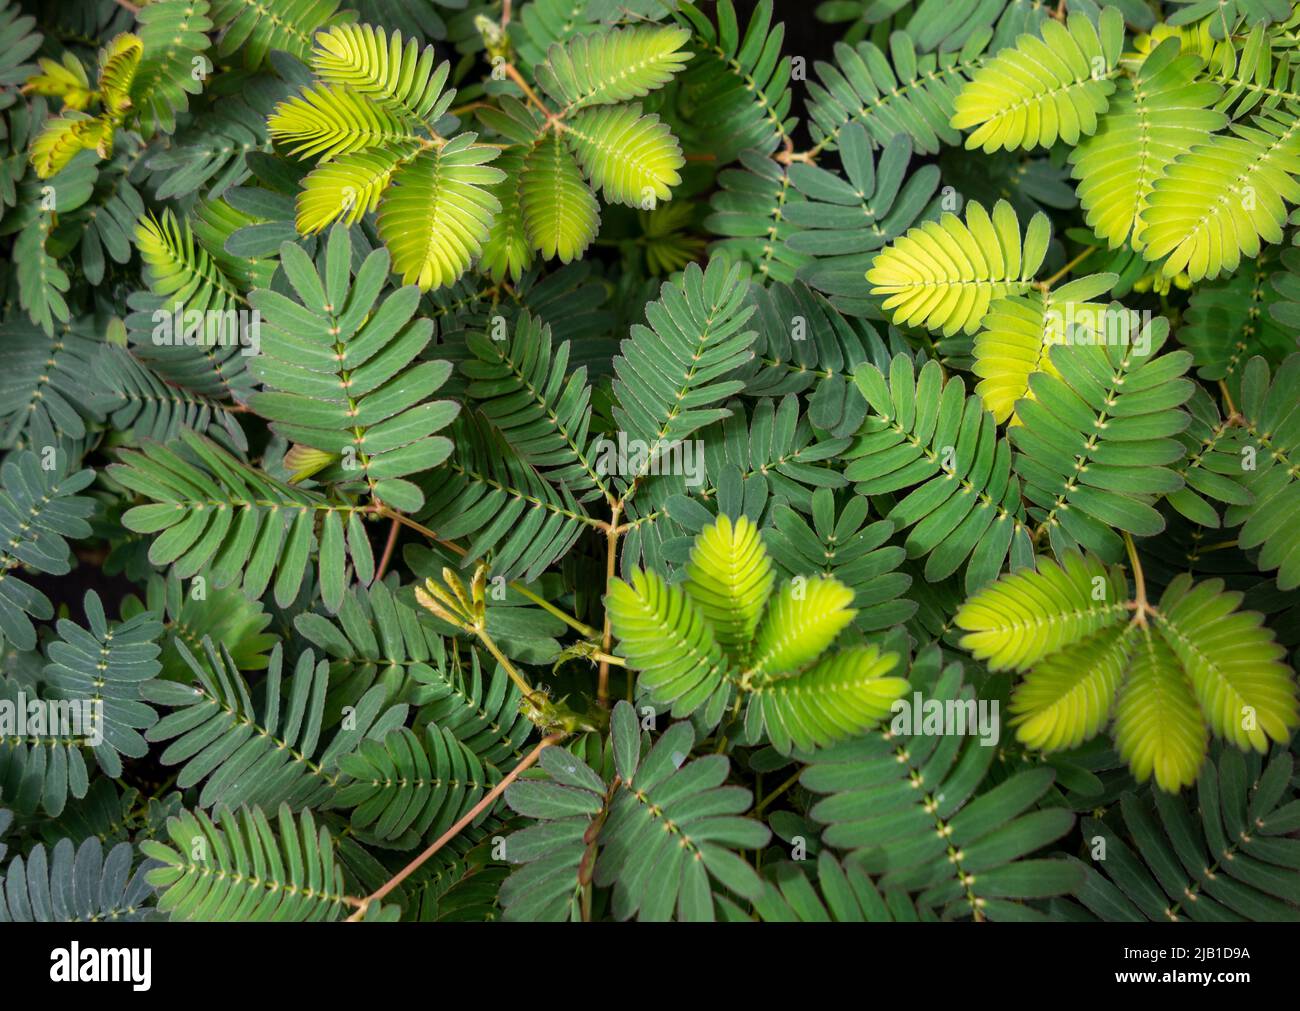 Full frame coseup shot of sensitive plant leaves Stock Photo